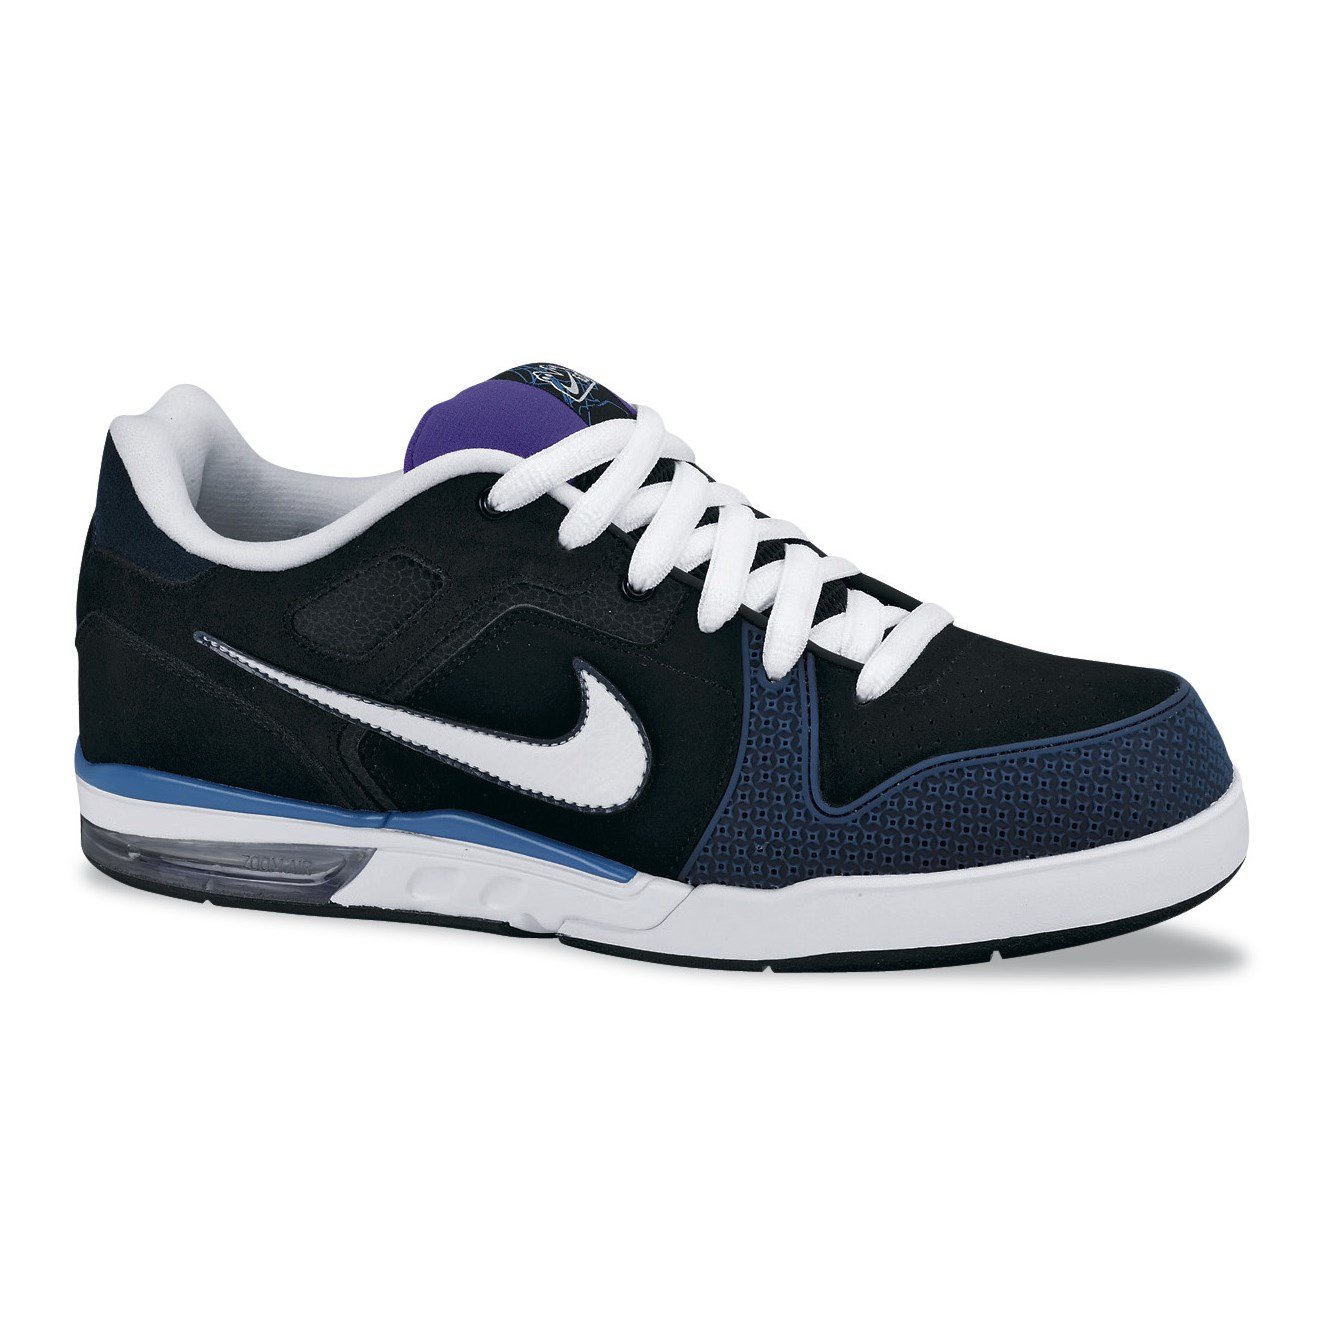 Nike 6.0 Zoom Shoes | evo